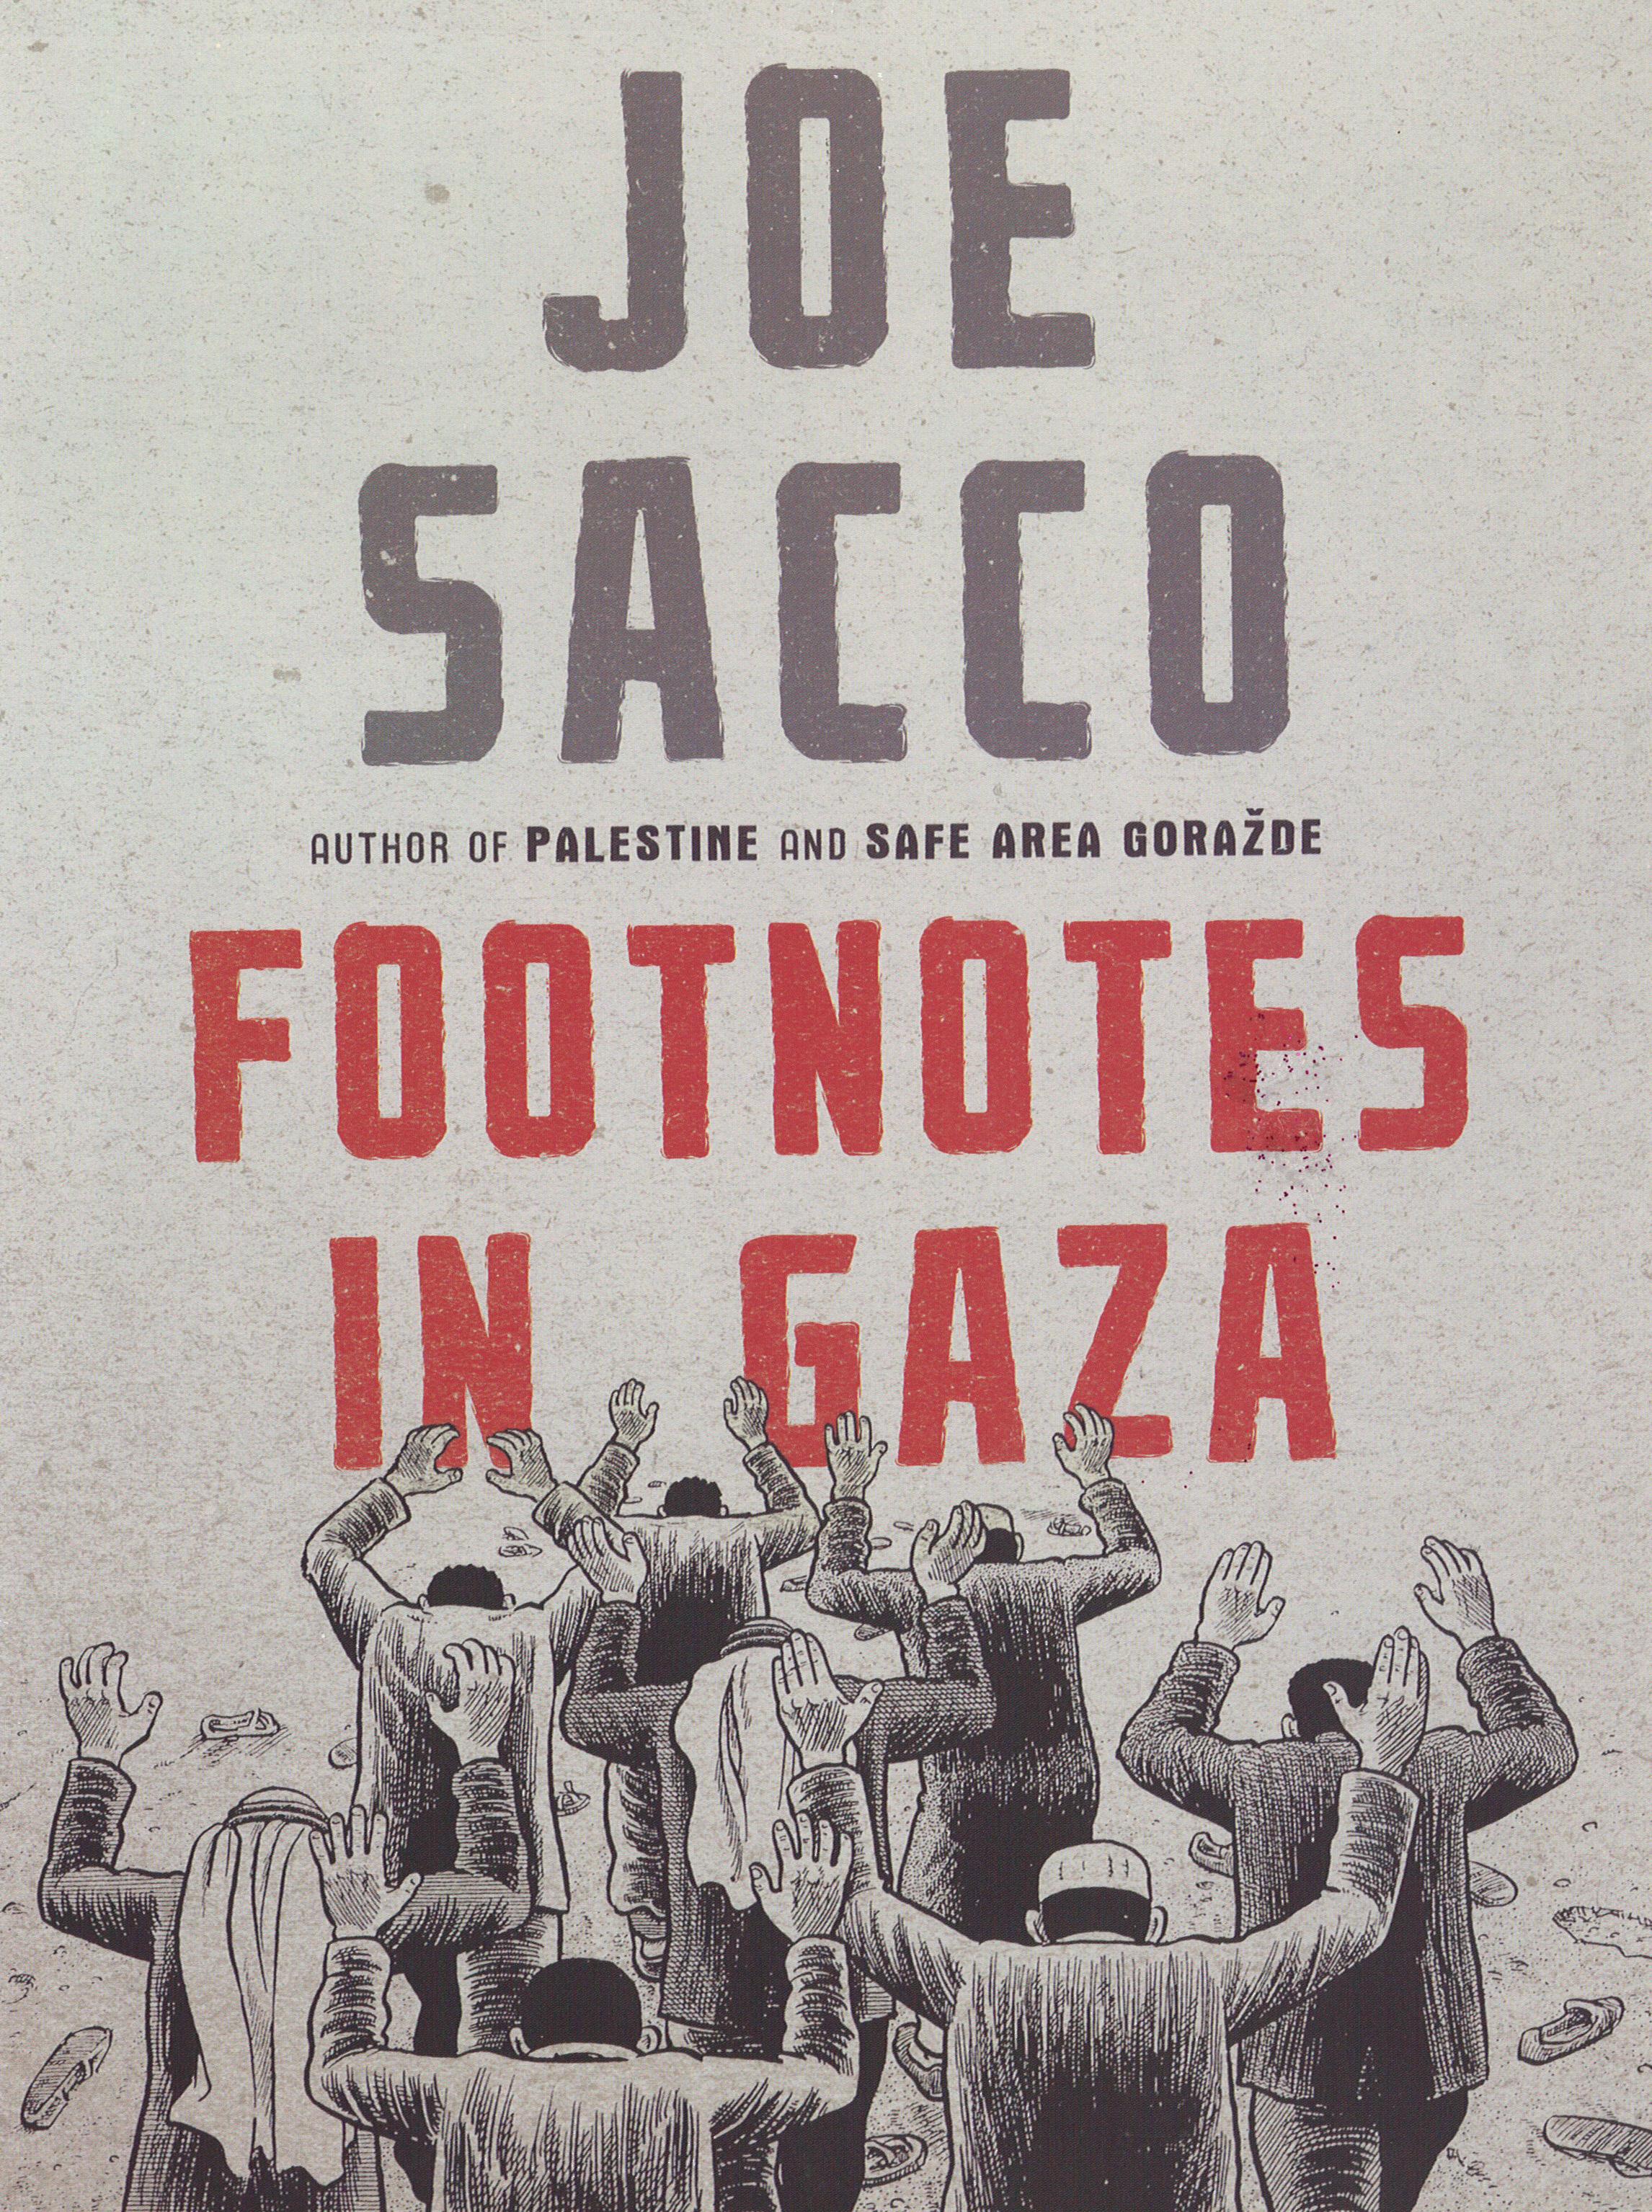 Footnotes in Gaza - Joe Sacco